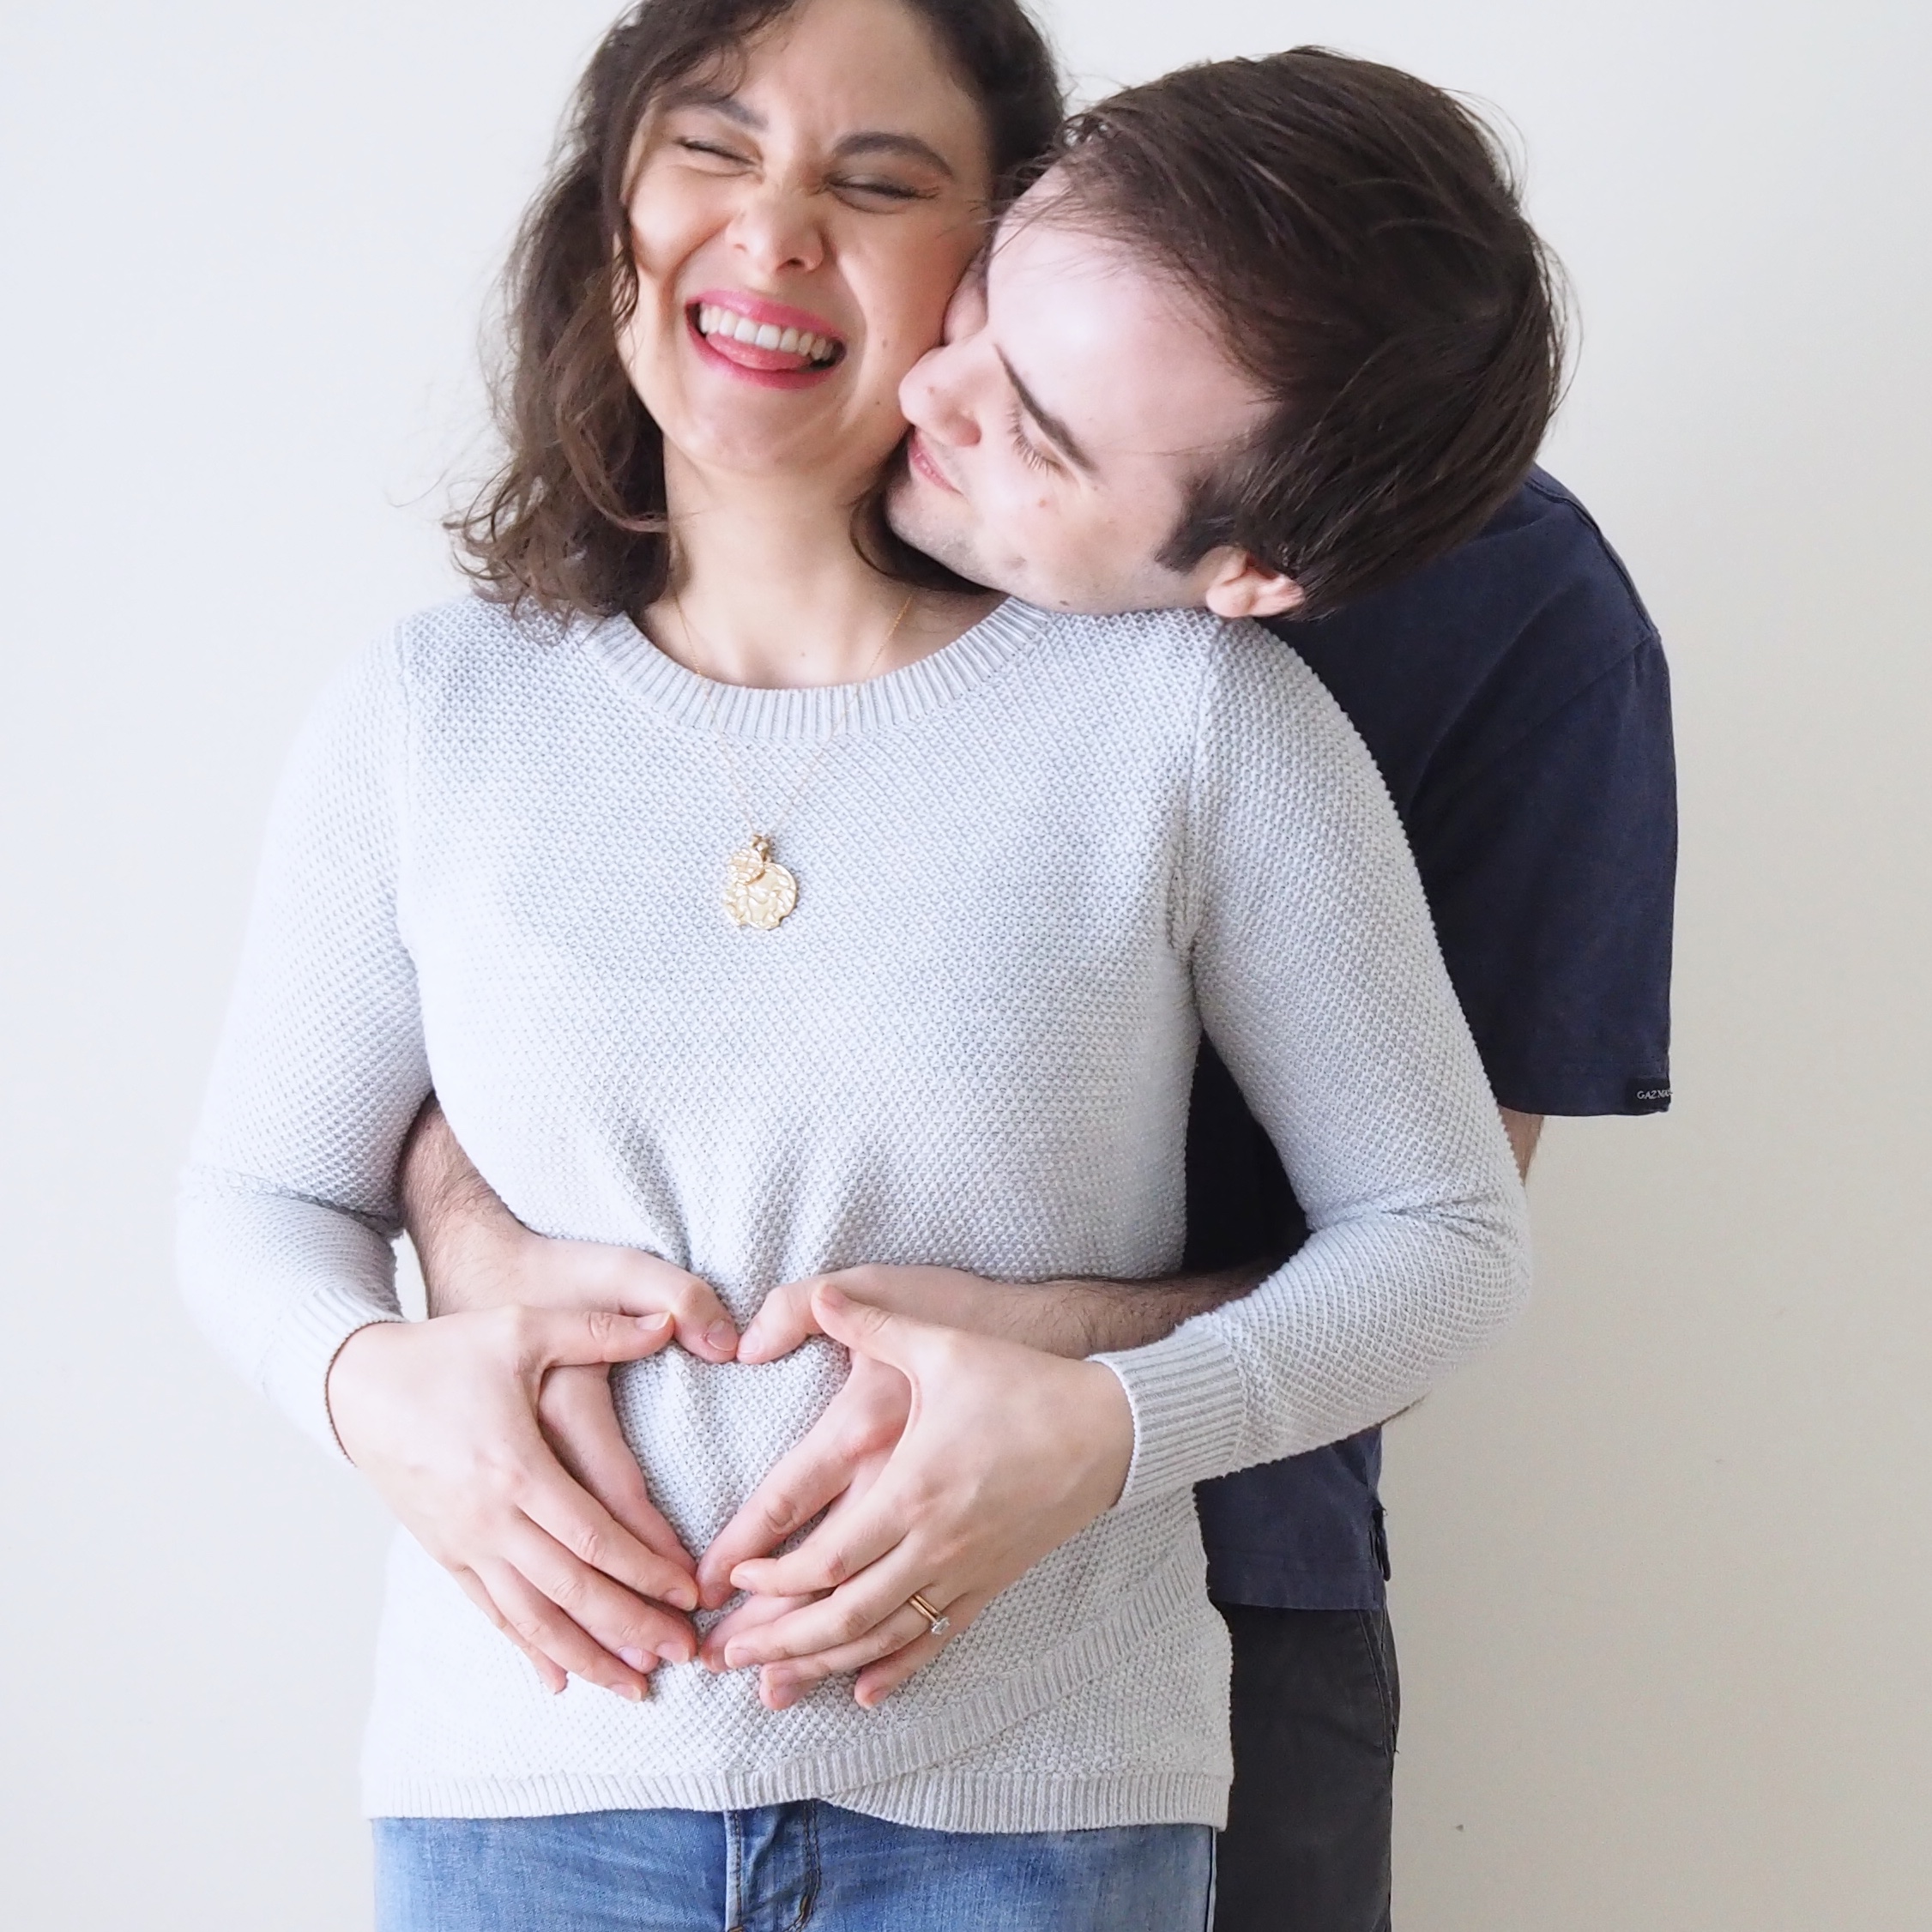 Pregnancy Announcement 4 laurennatalia.co